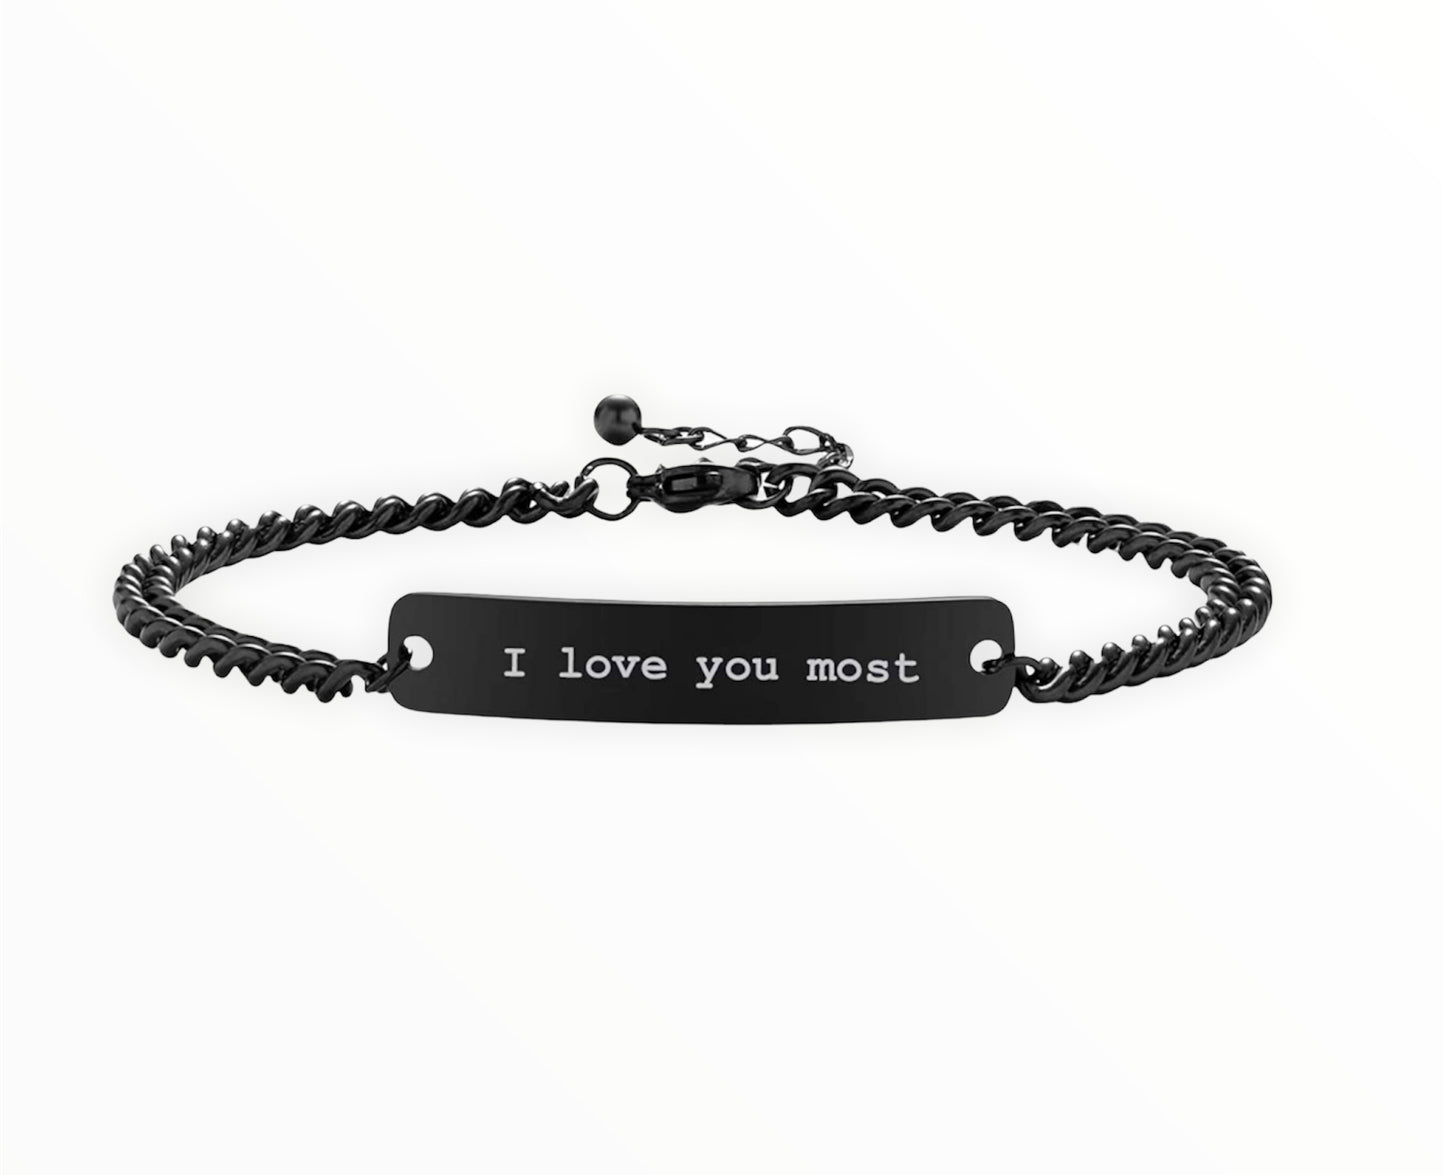 Stainless Steel Bracelet - I love you most - Black